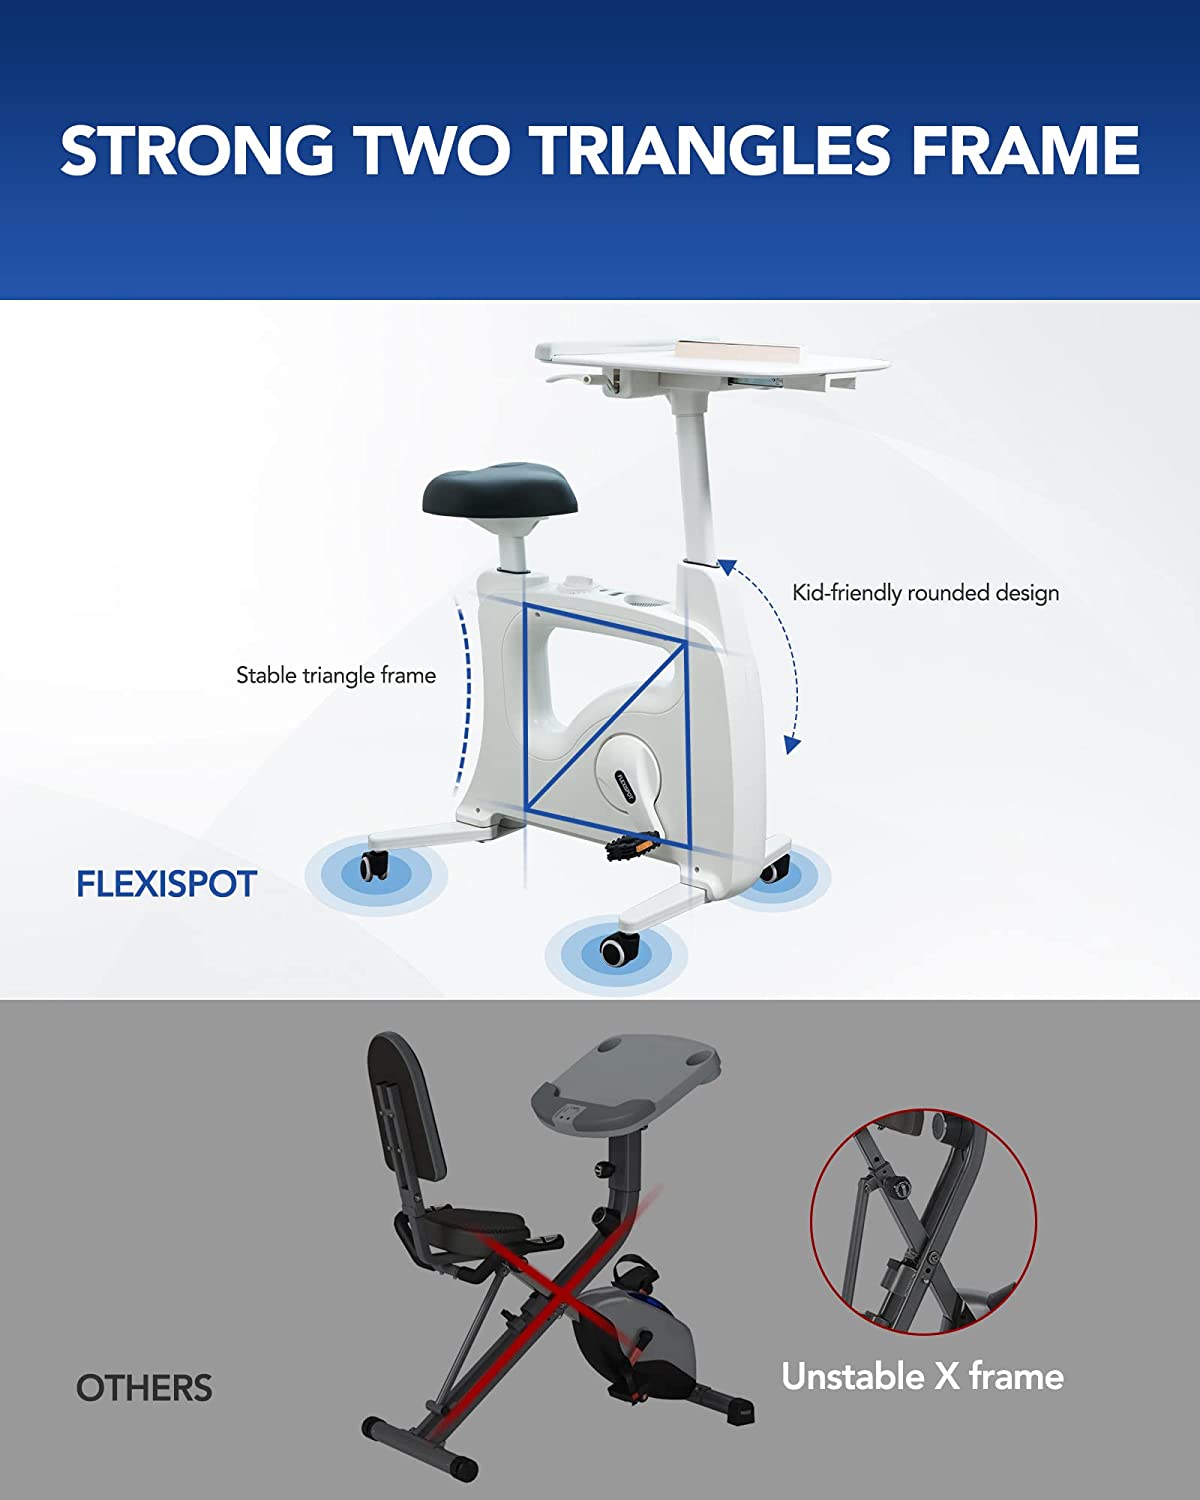 FlexiSpot Desk Bike Chair Home Office Workstation - $240